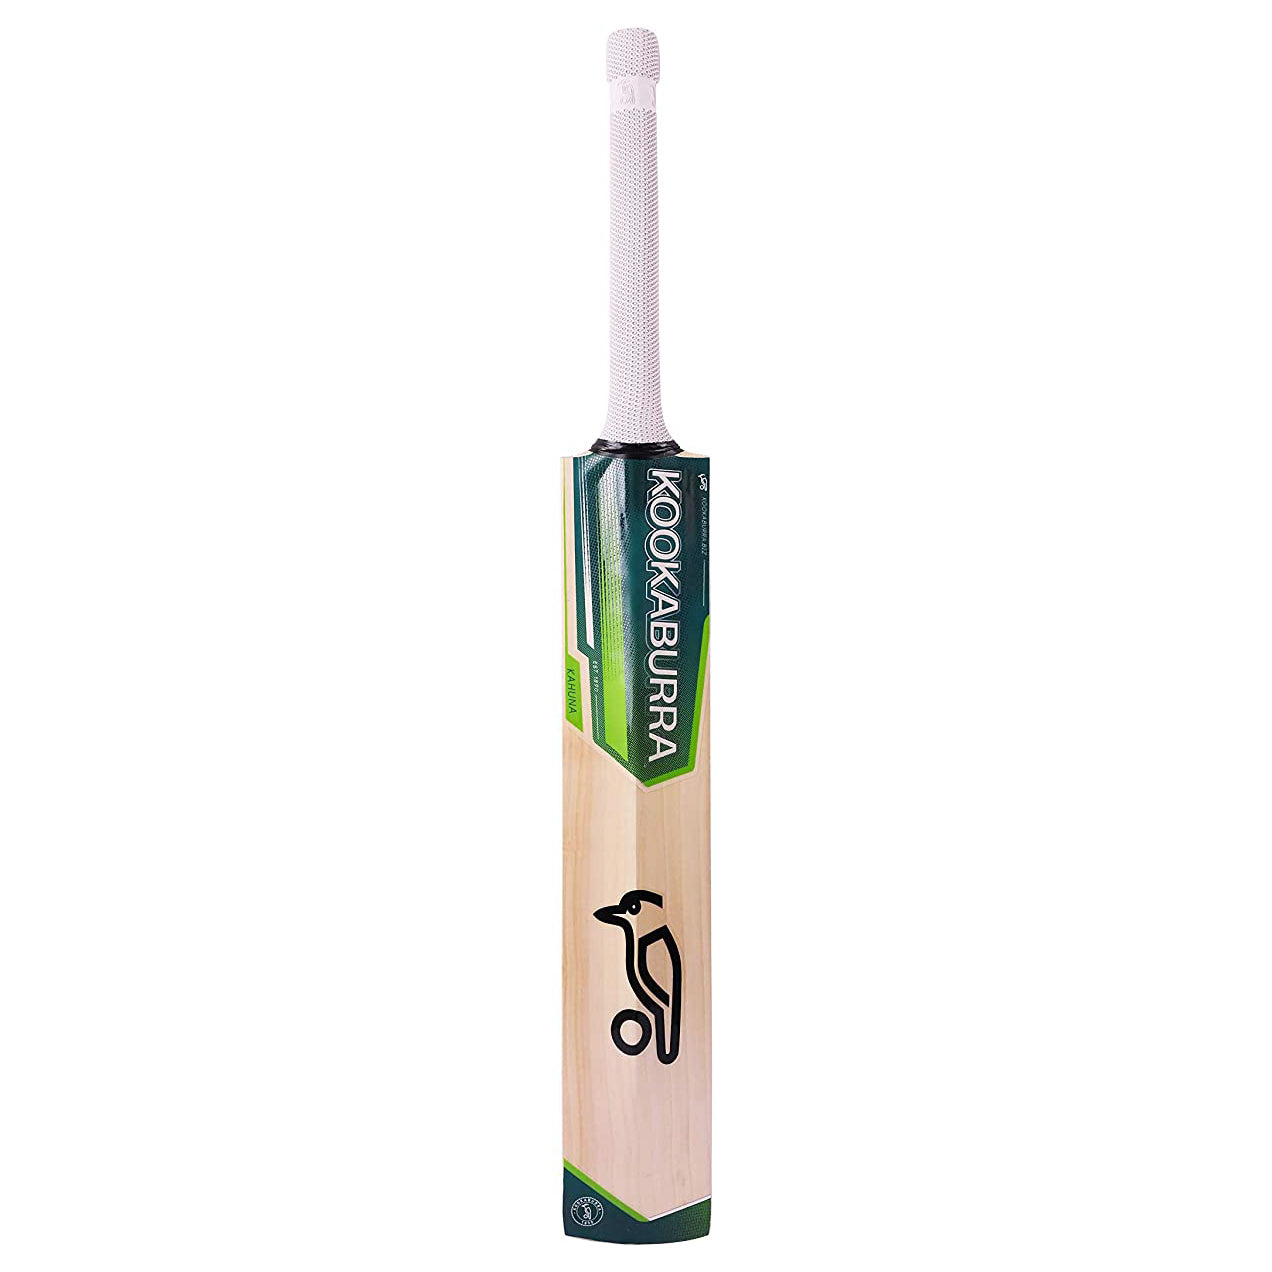 Kookaburra Kahuna 1000 English Willow Cricket Bat - Best Price online Prokicksports.com